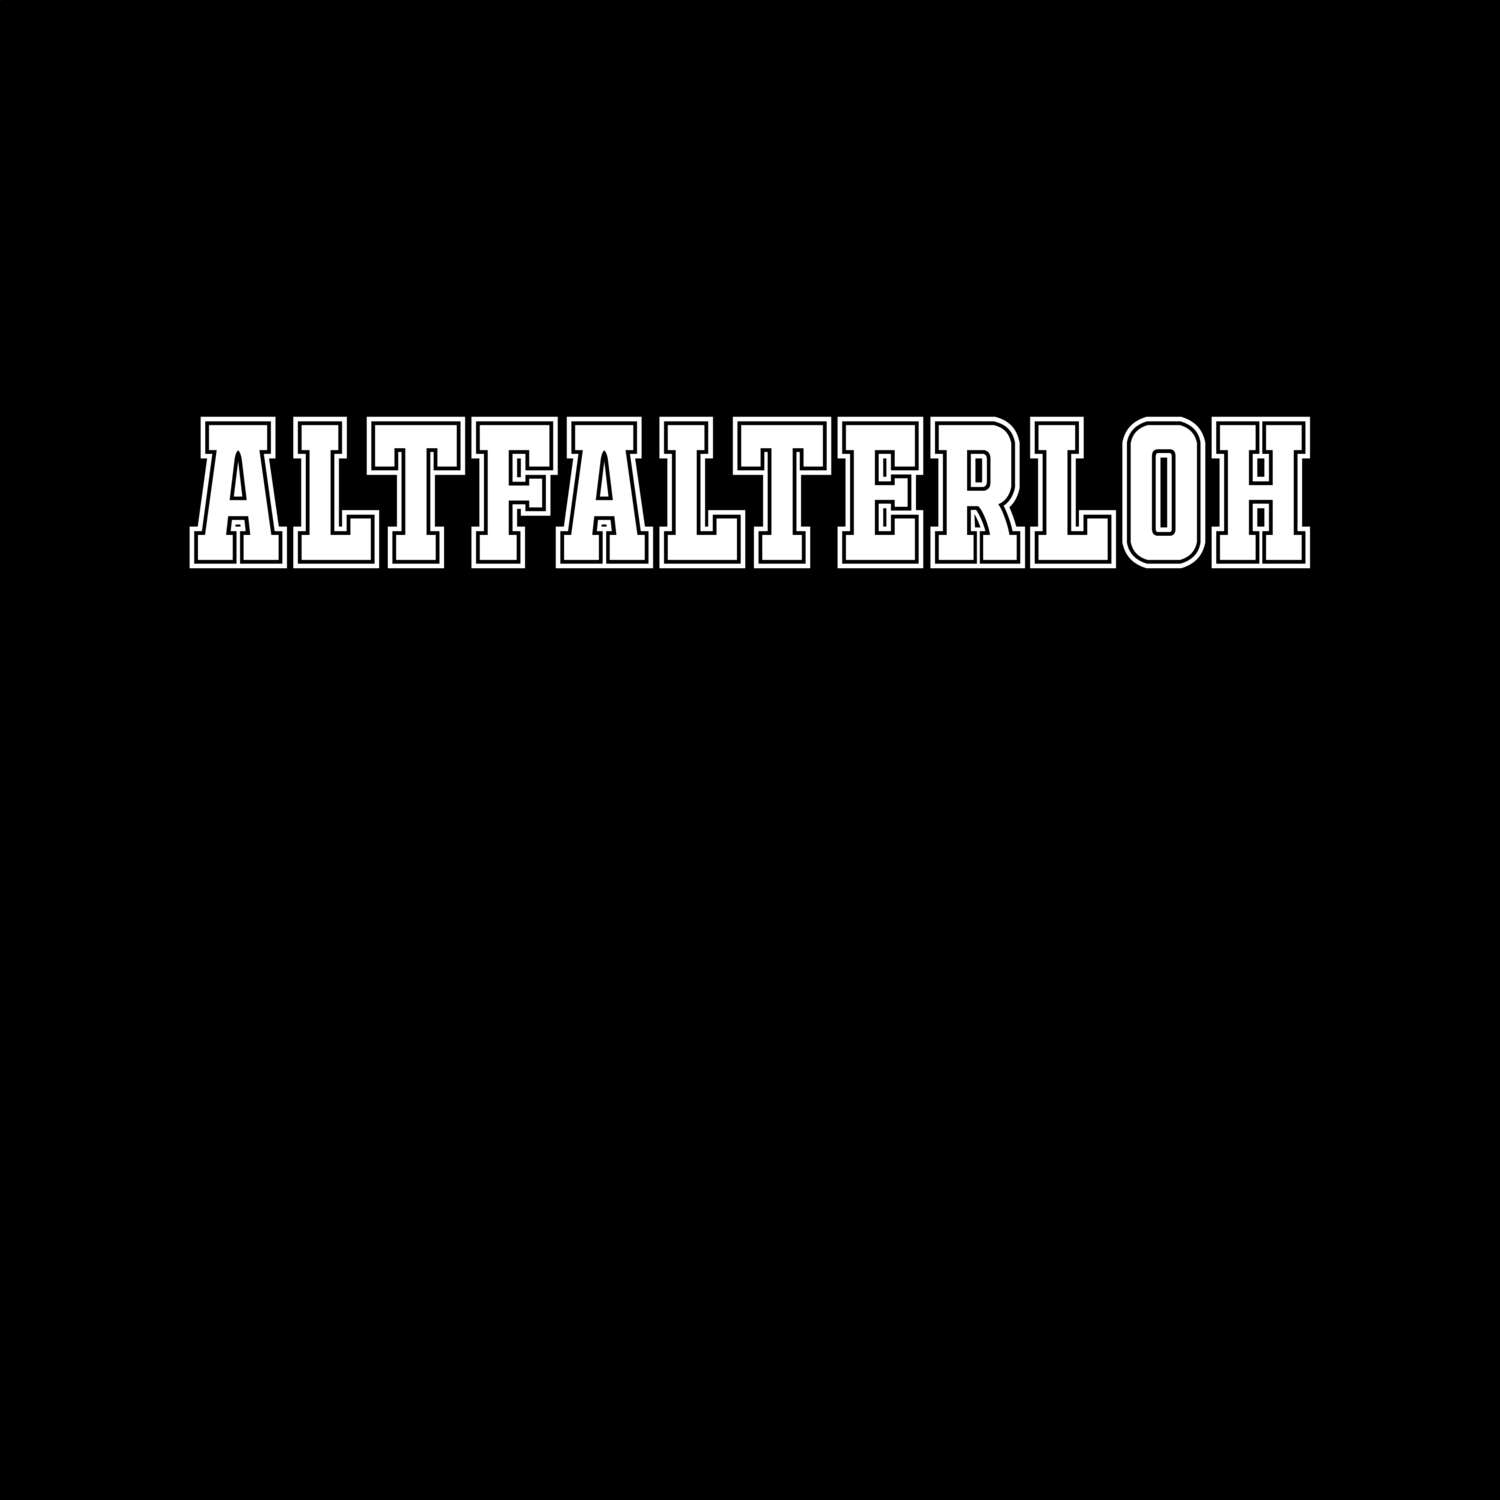 Altfalterloh T-Shirt »Classic«